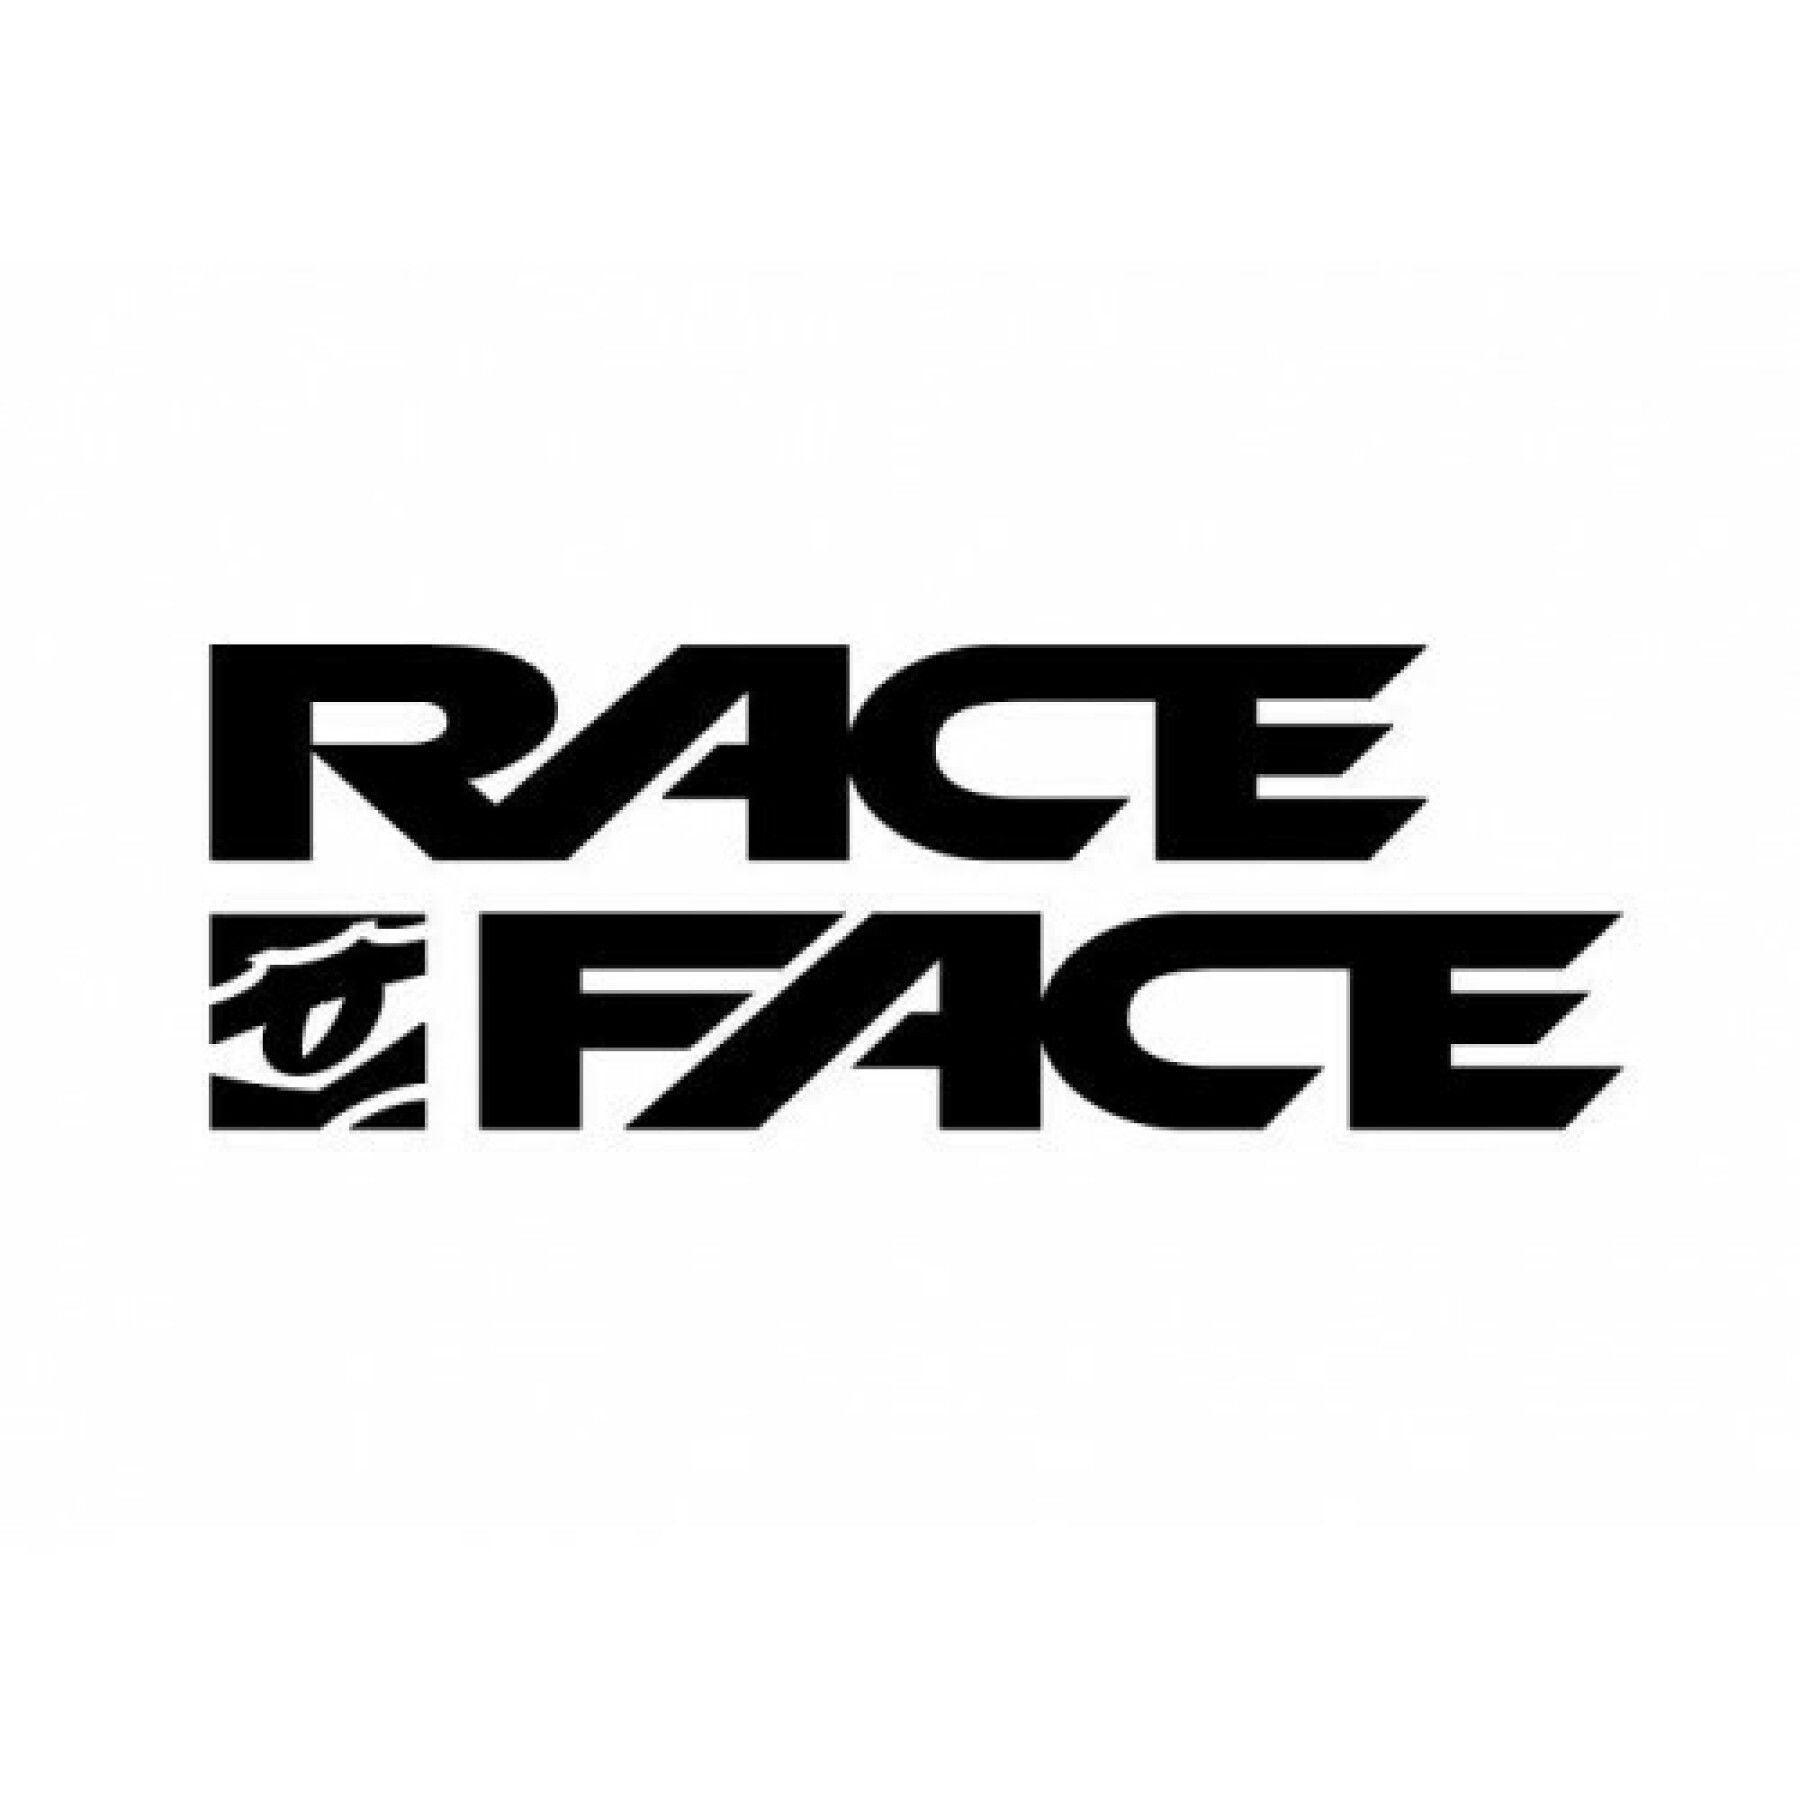 Llanta Race Face arc offset - 30 - 27.5 - 28t